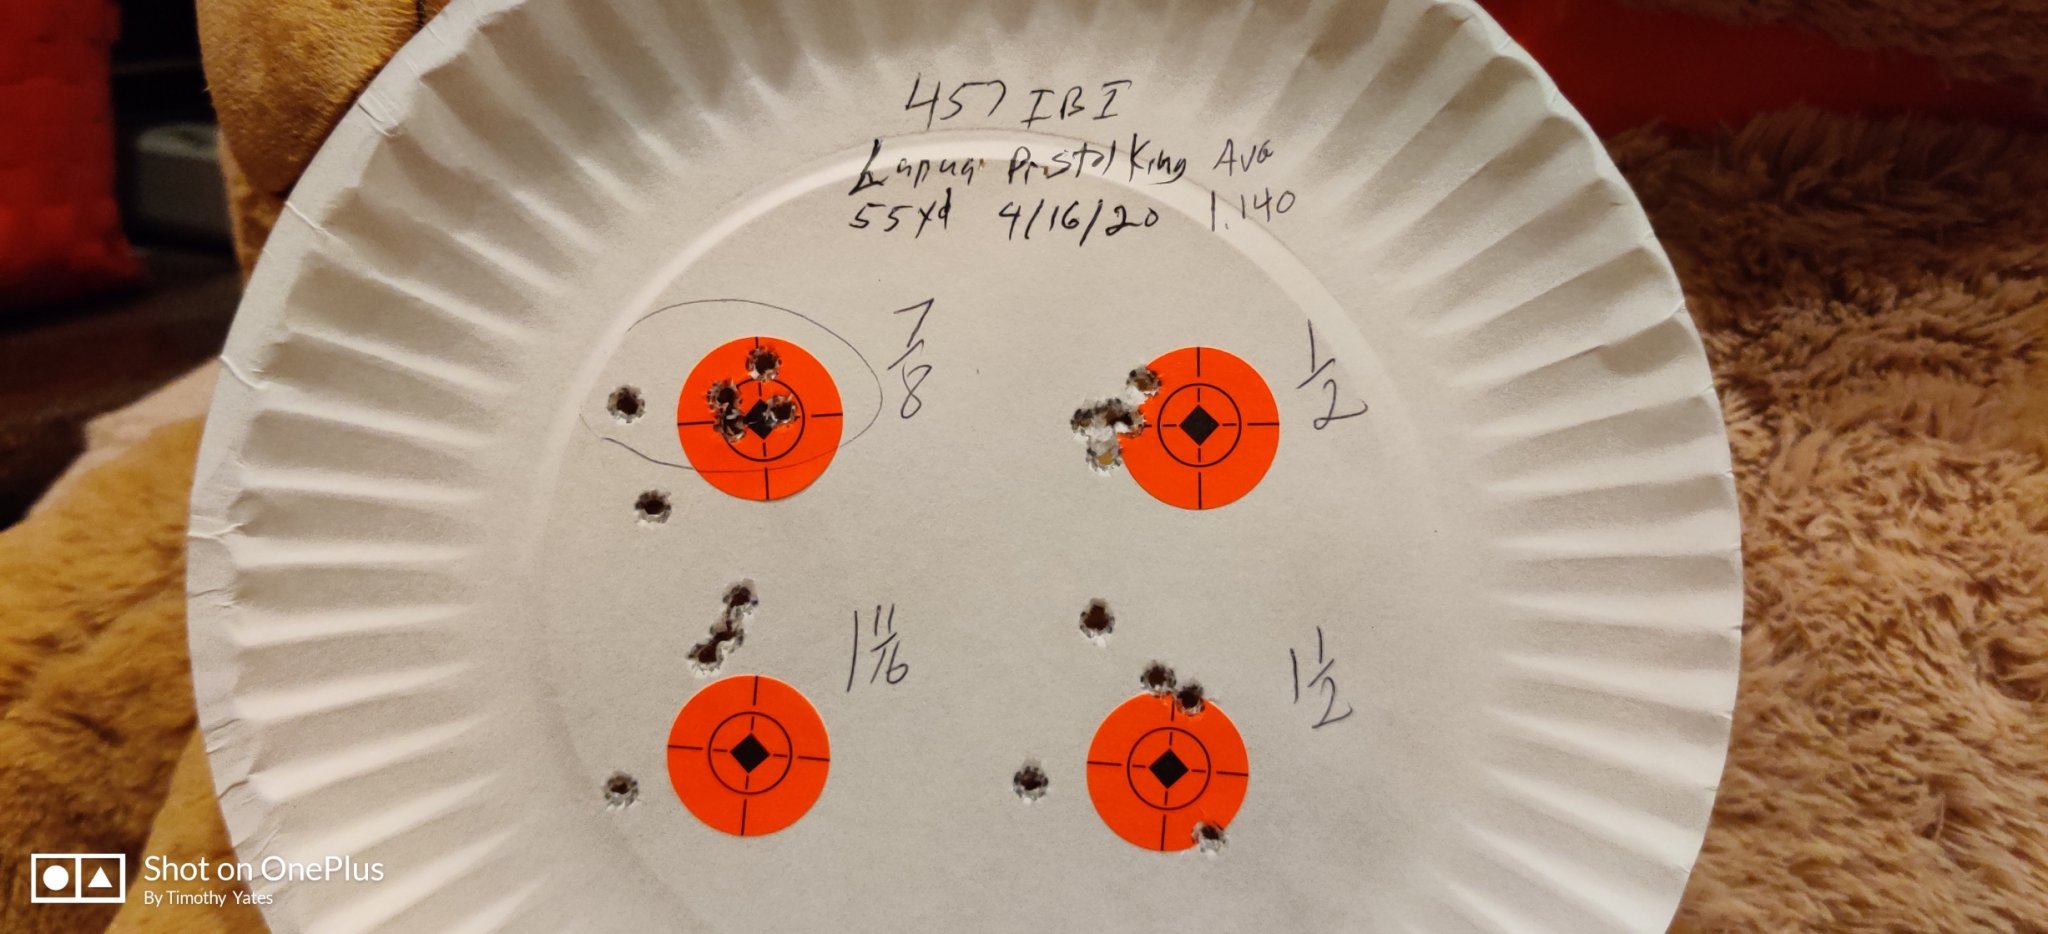 457 IBI Lapua Pistol King 4-16-20 100 yards.jpg